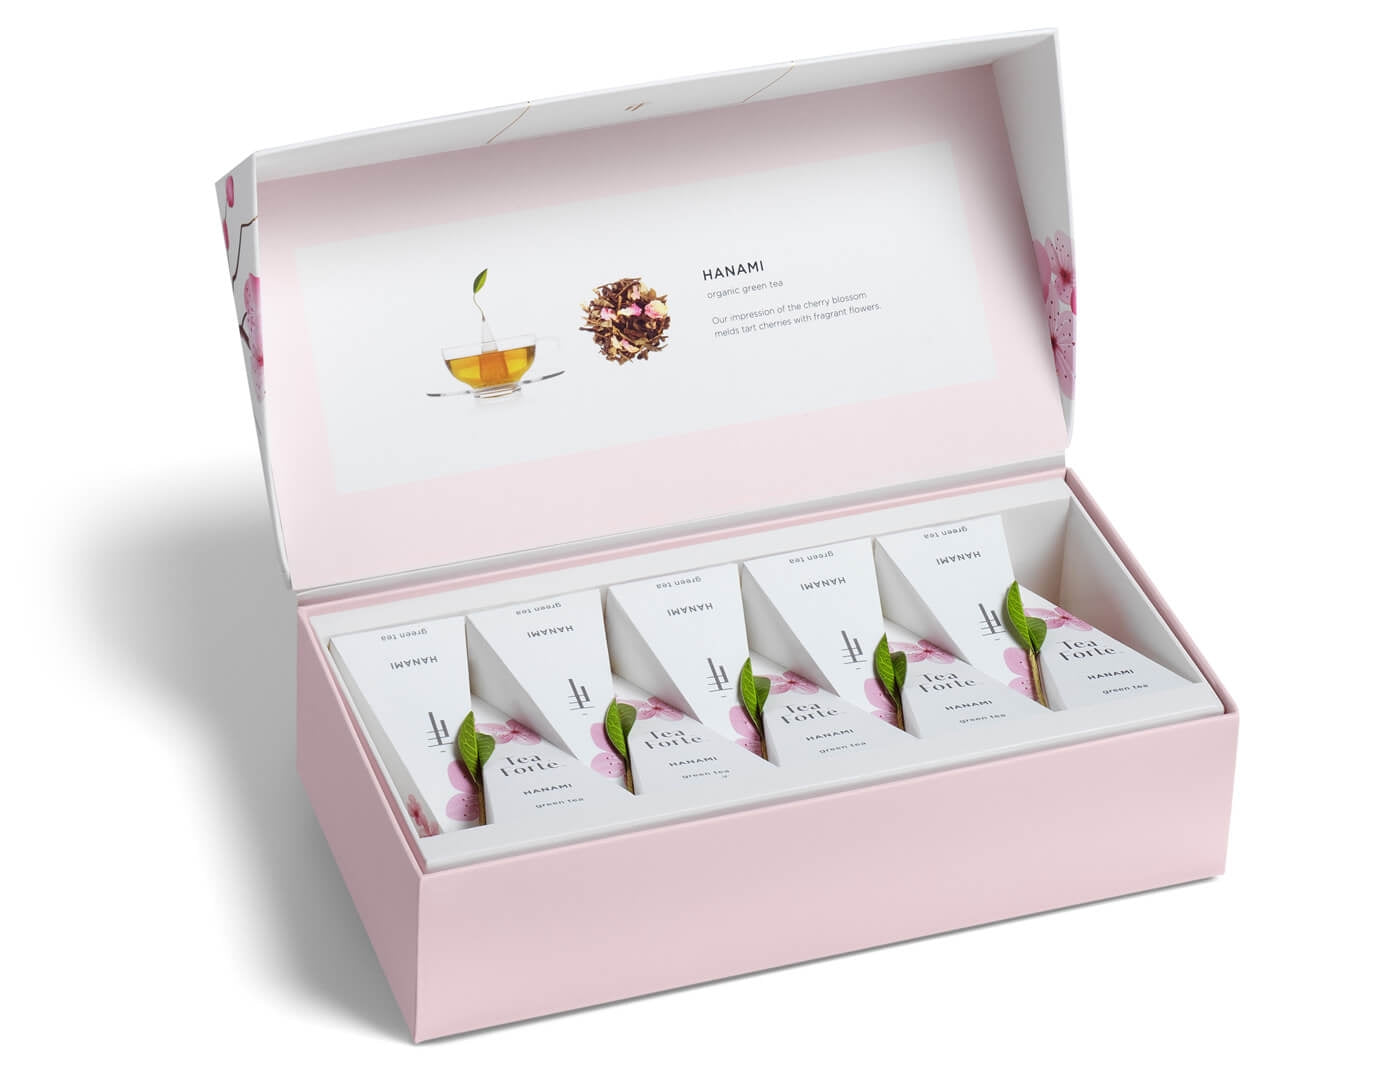 Tea Forte - Cherry Blossom Hanami Petite Presentation Box